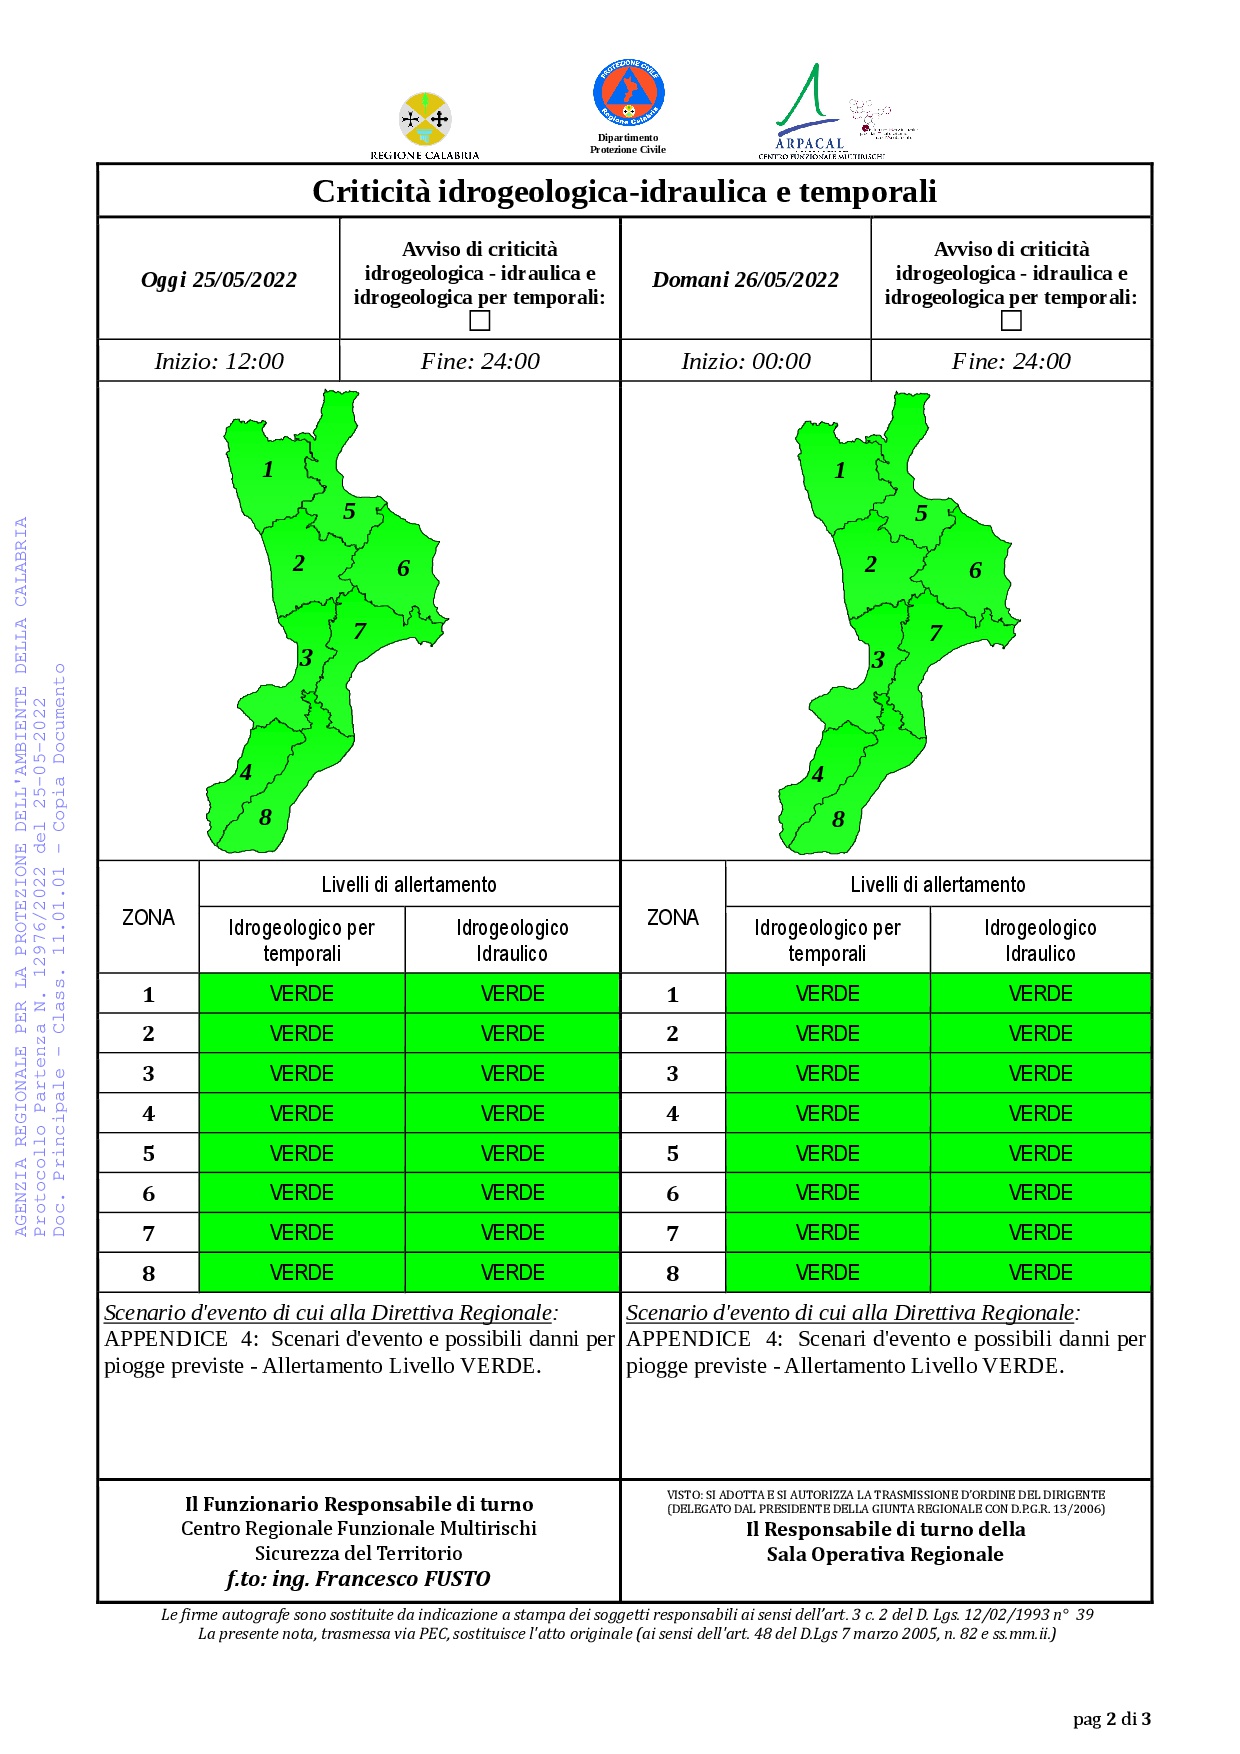 Criticità idrogeologica-idraulica e temporali in Calabria 26-05-2022